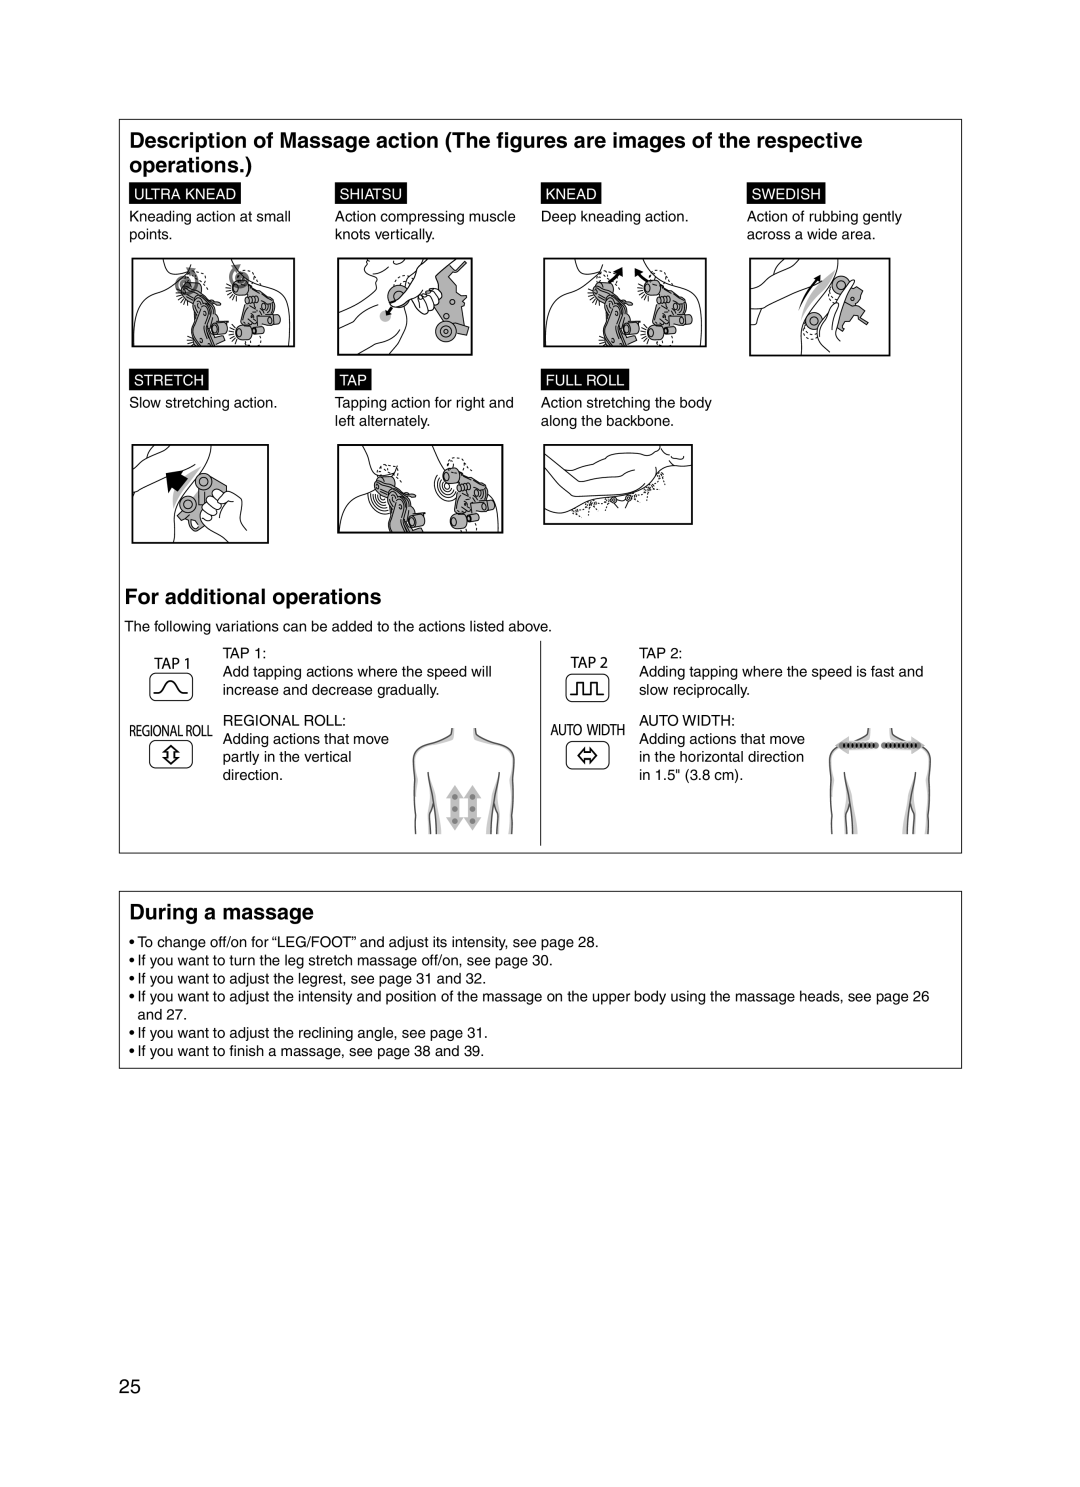 Panasonic 30003 manual For additional operations, During a massage, Ultra Knead, Shiatsu, Swedish, Stretch, Full Roll 